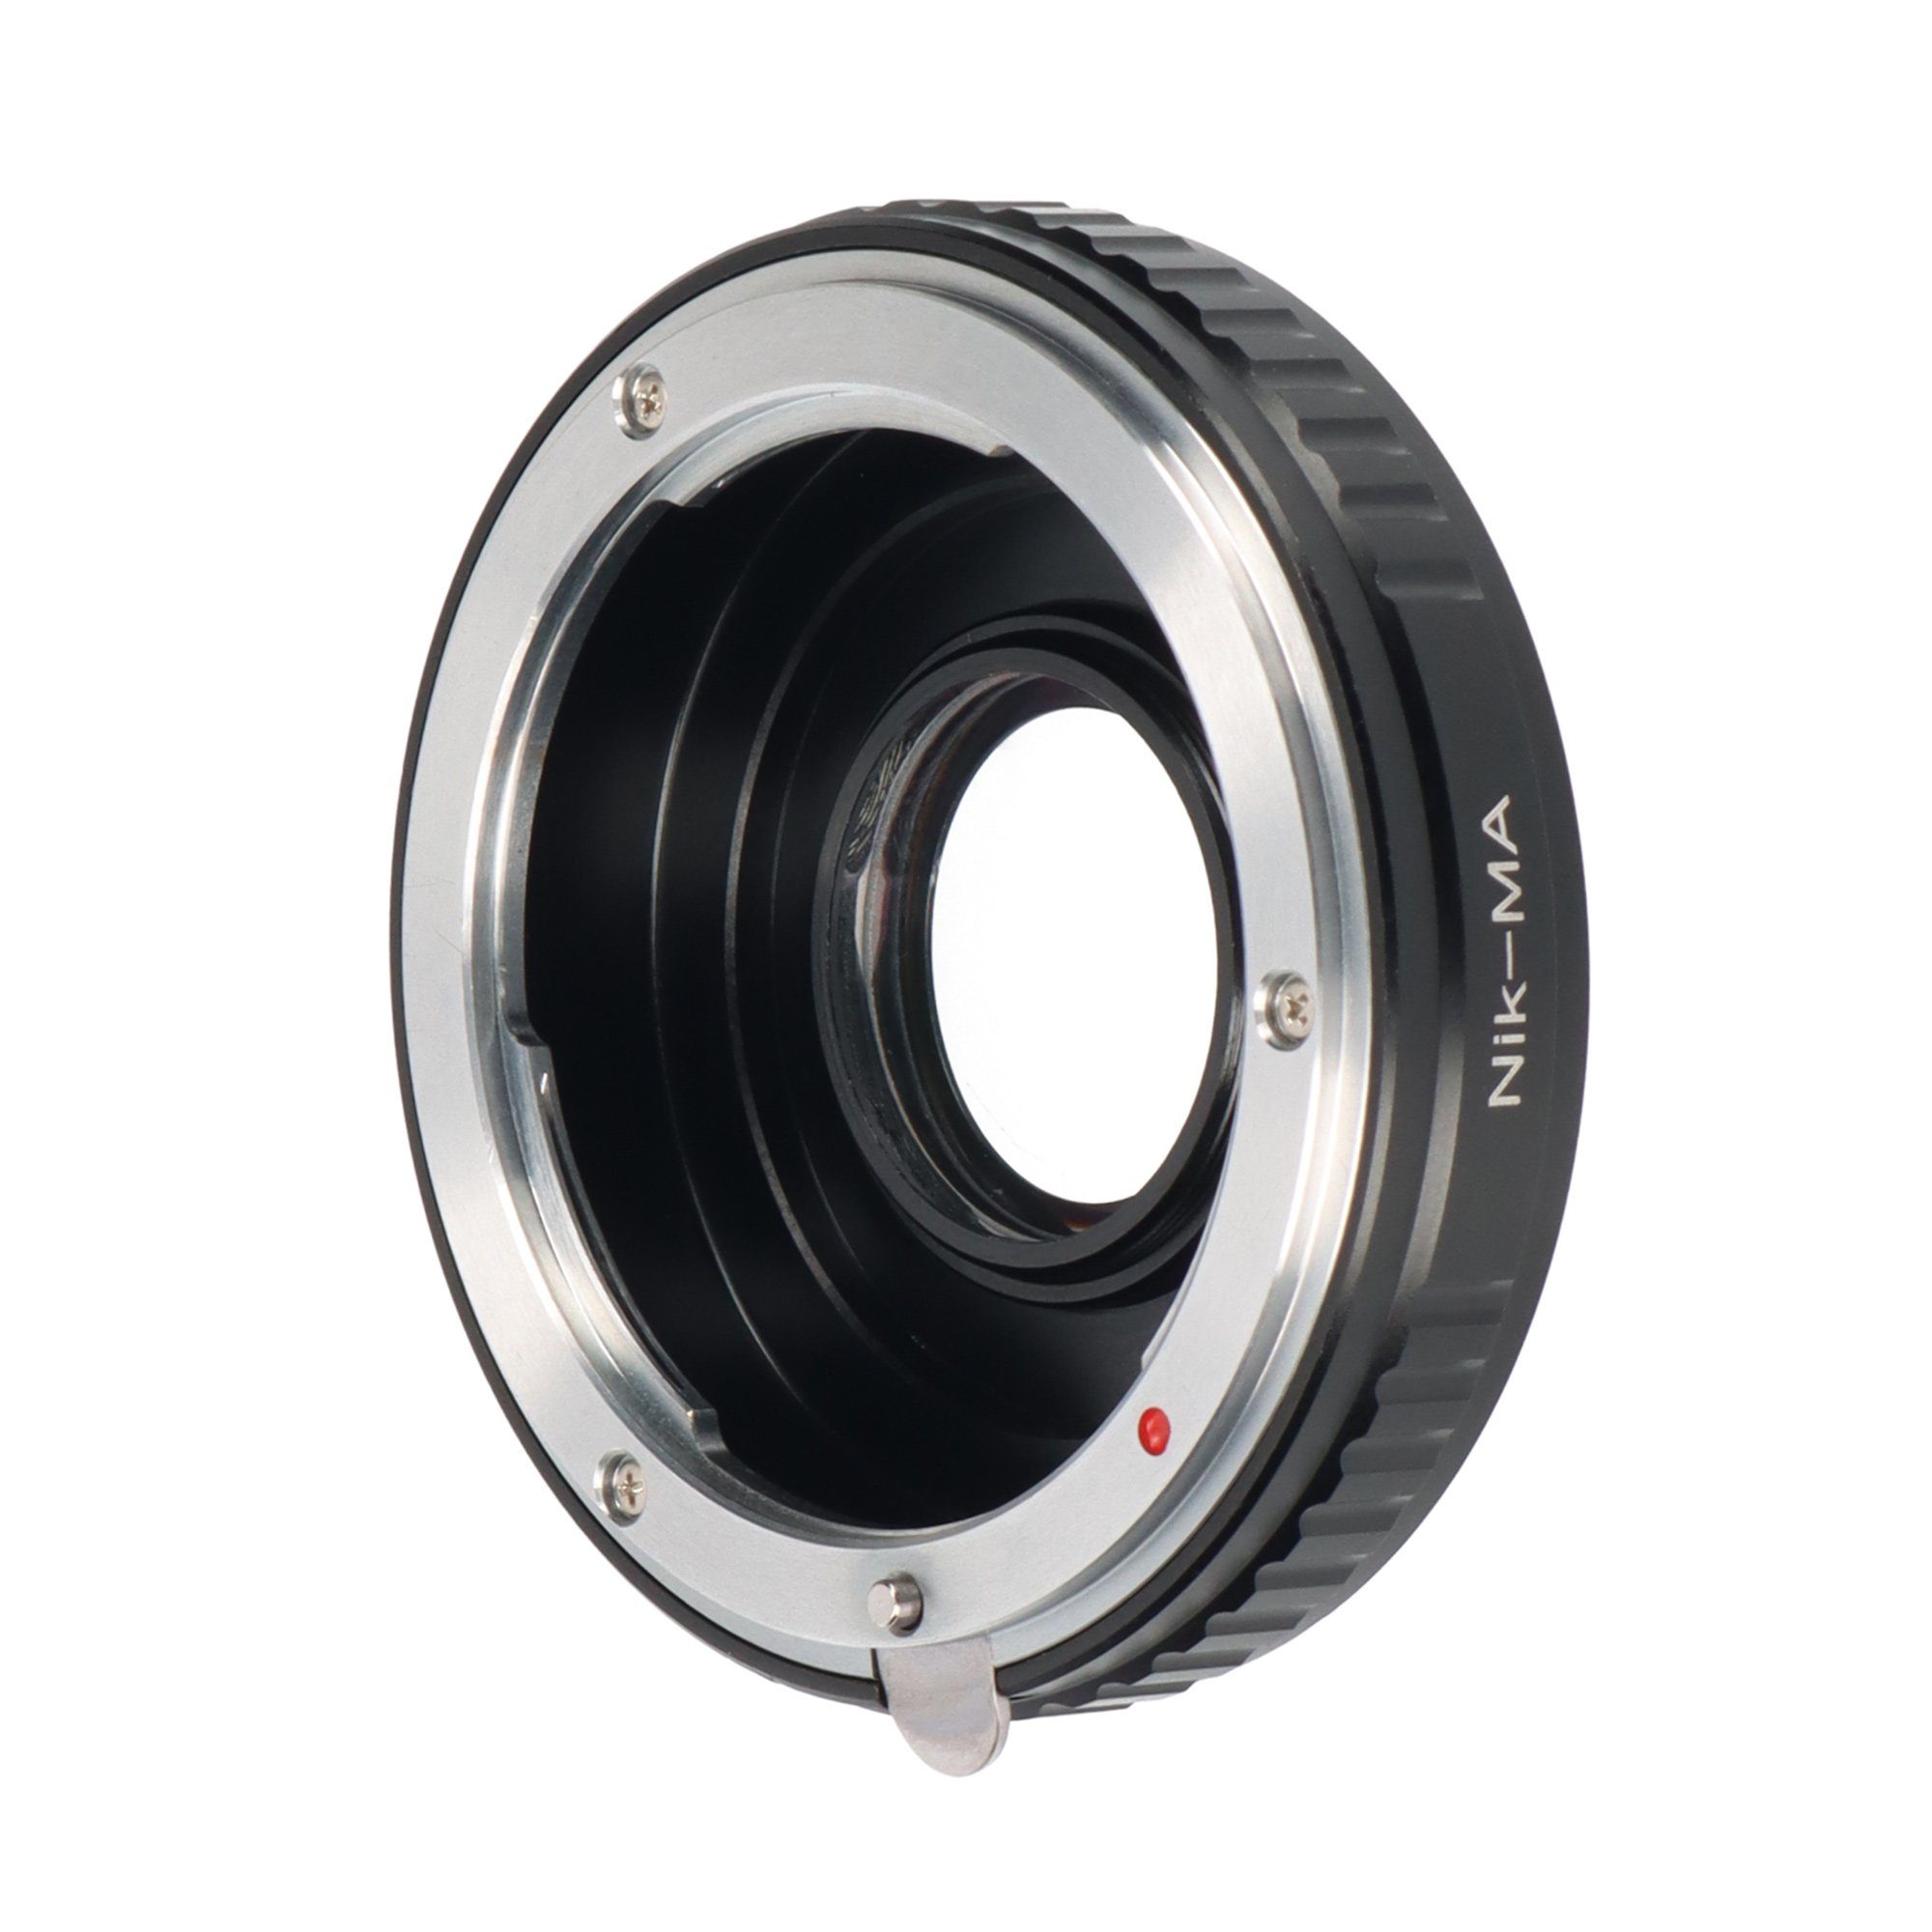 Adapter Korrekturlinse Objektiveadapter Sony F-Objektive ayex Nikon Alpha - +